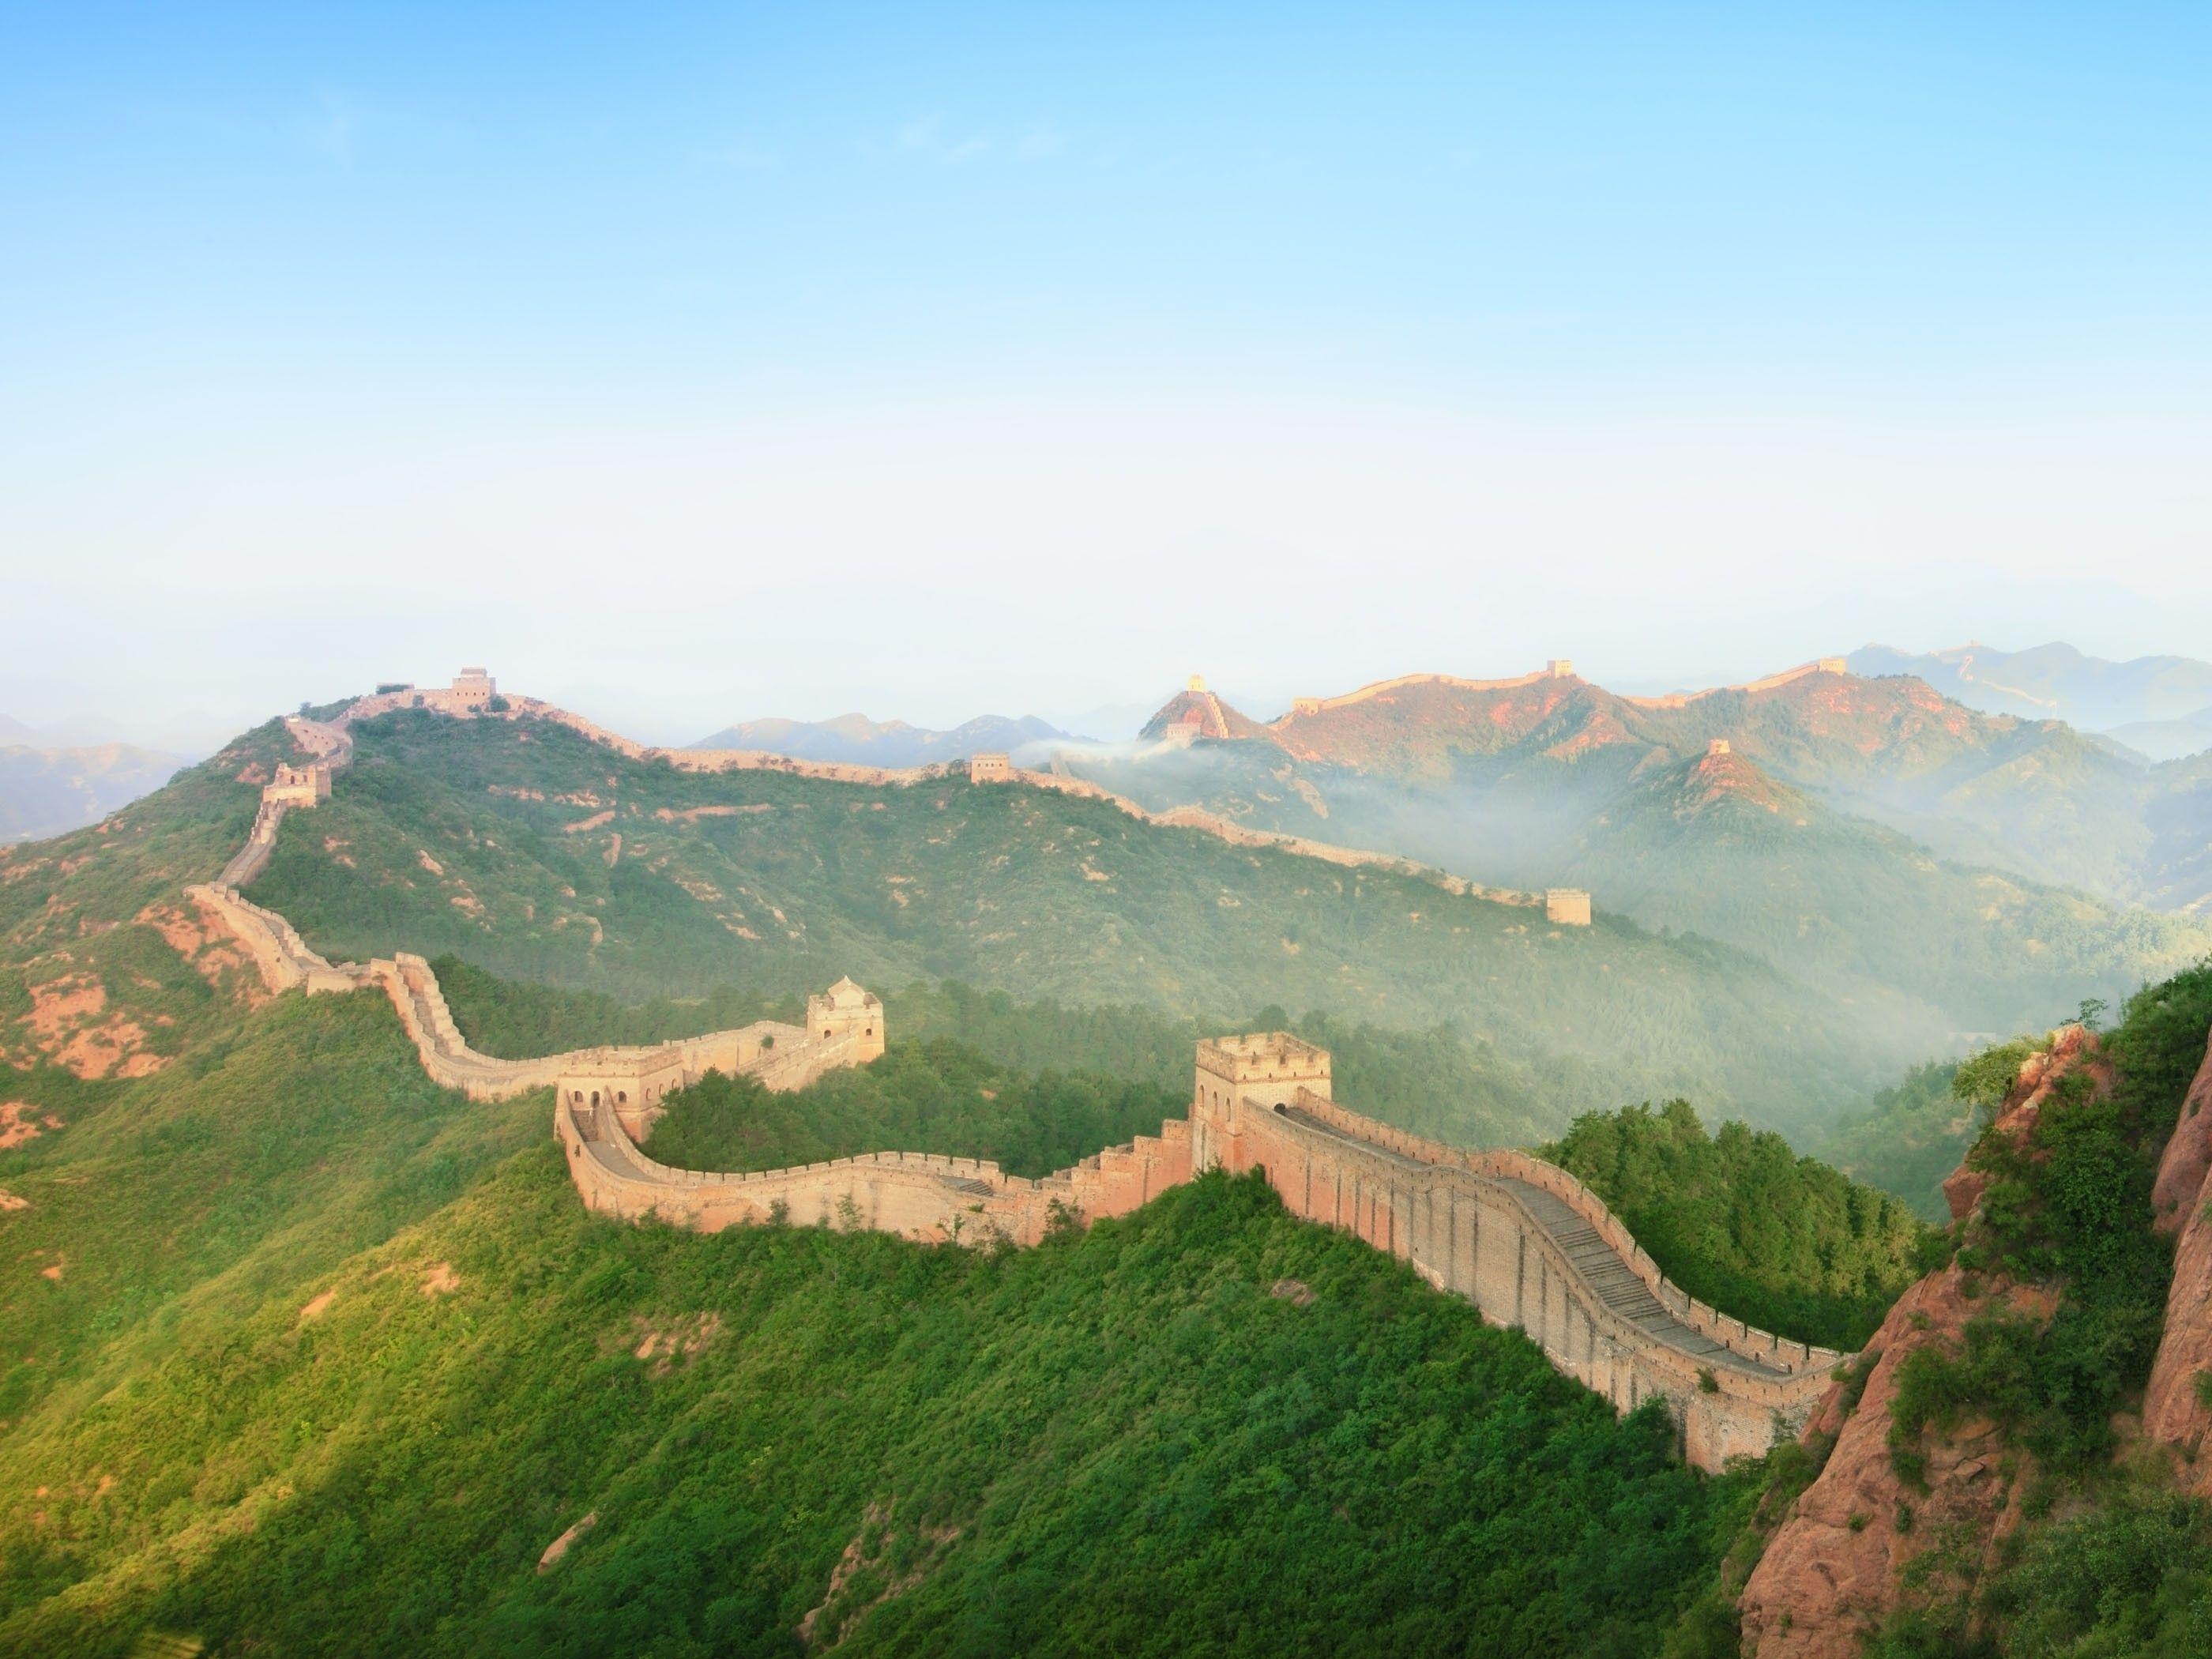 Great Wall Wallpaper